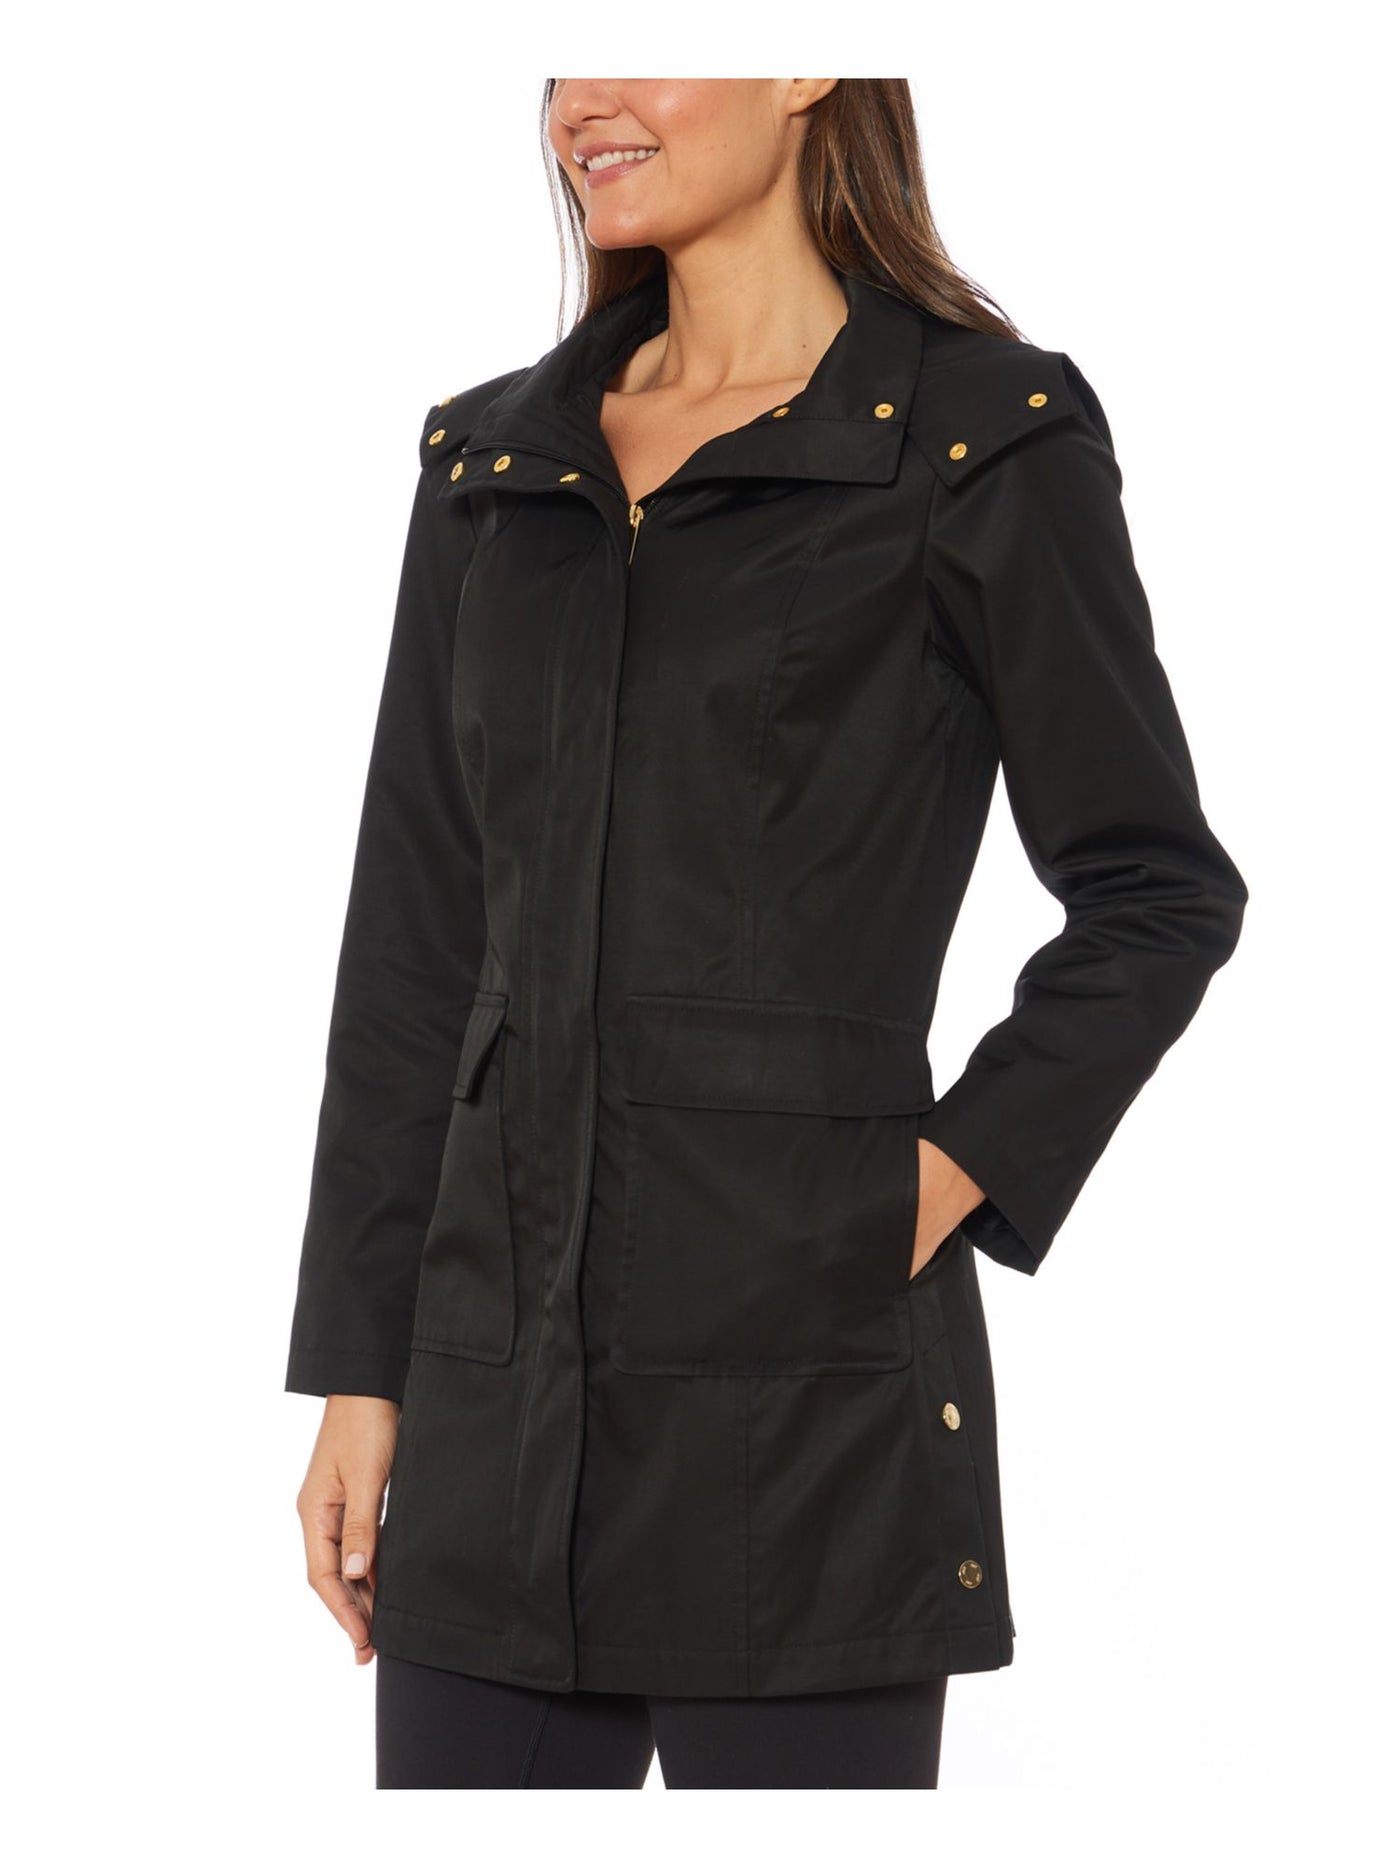 JONES NY Womens Black Pocketed Zippered Hooded Snap-collar Water-resista Raincoat M